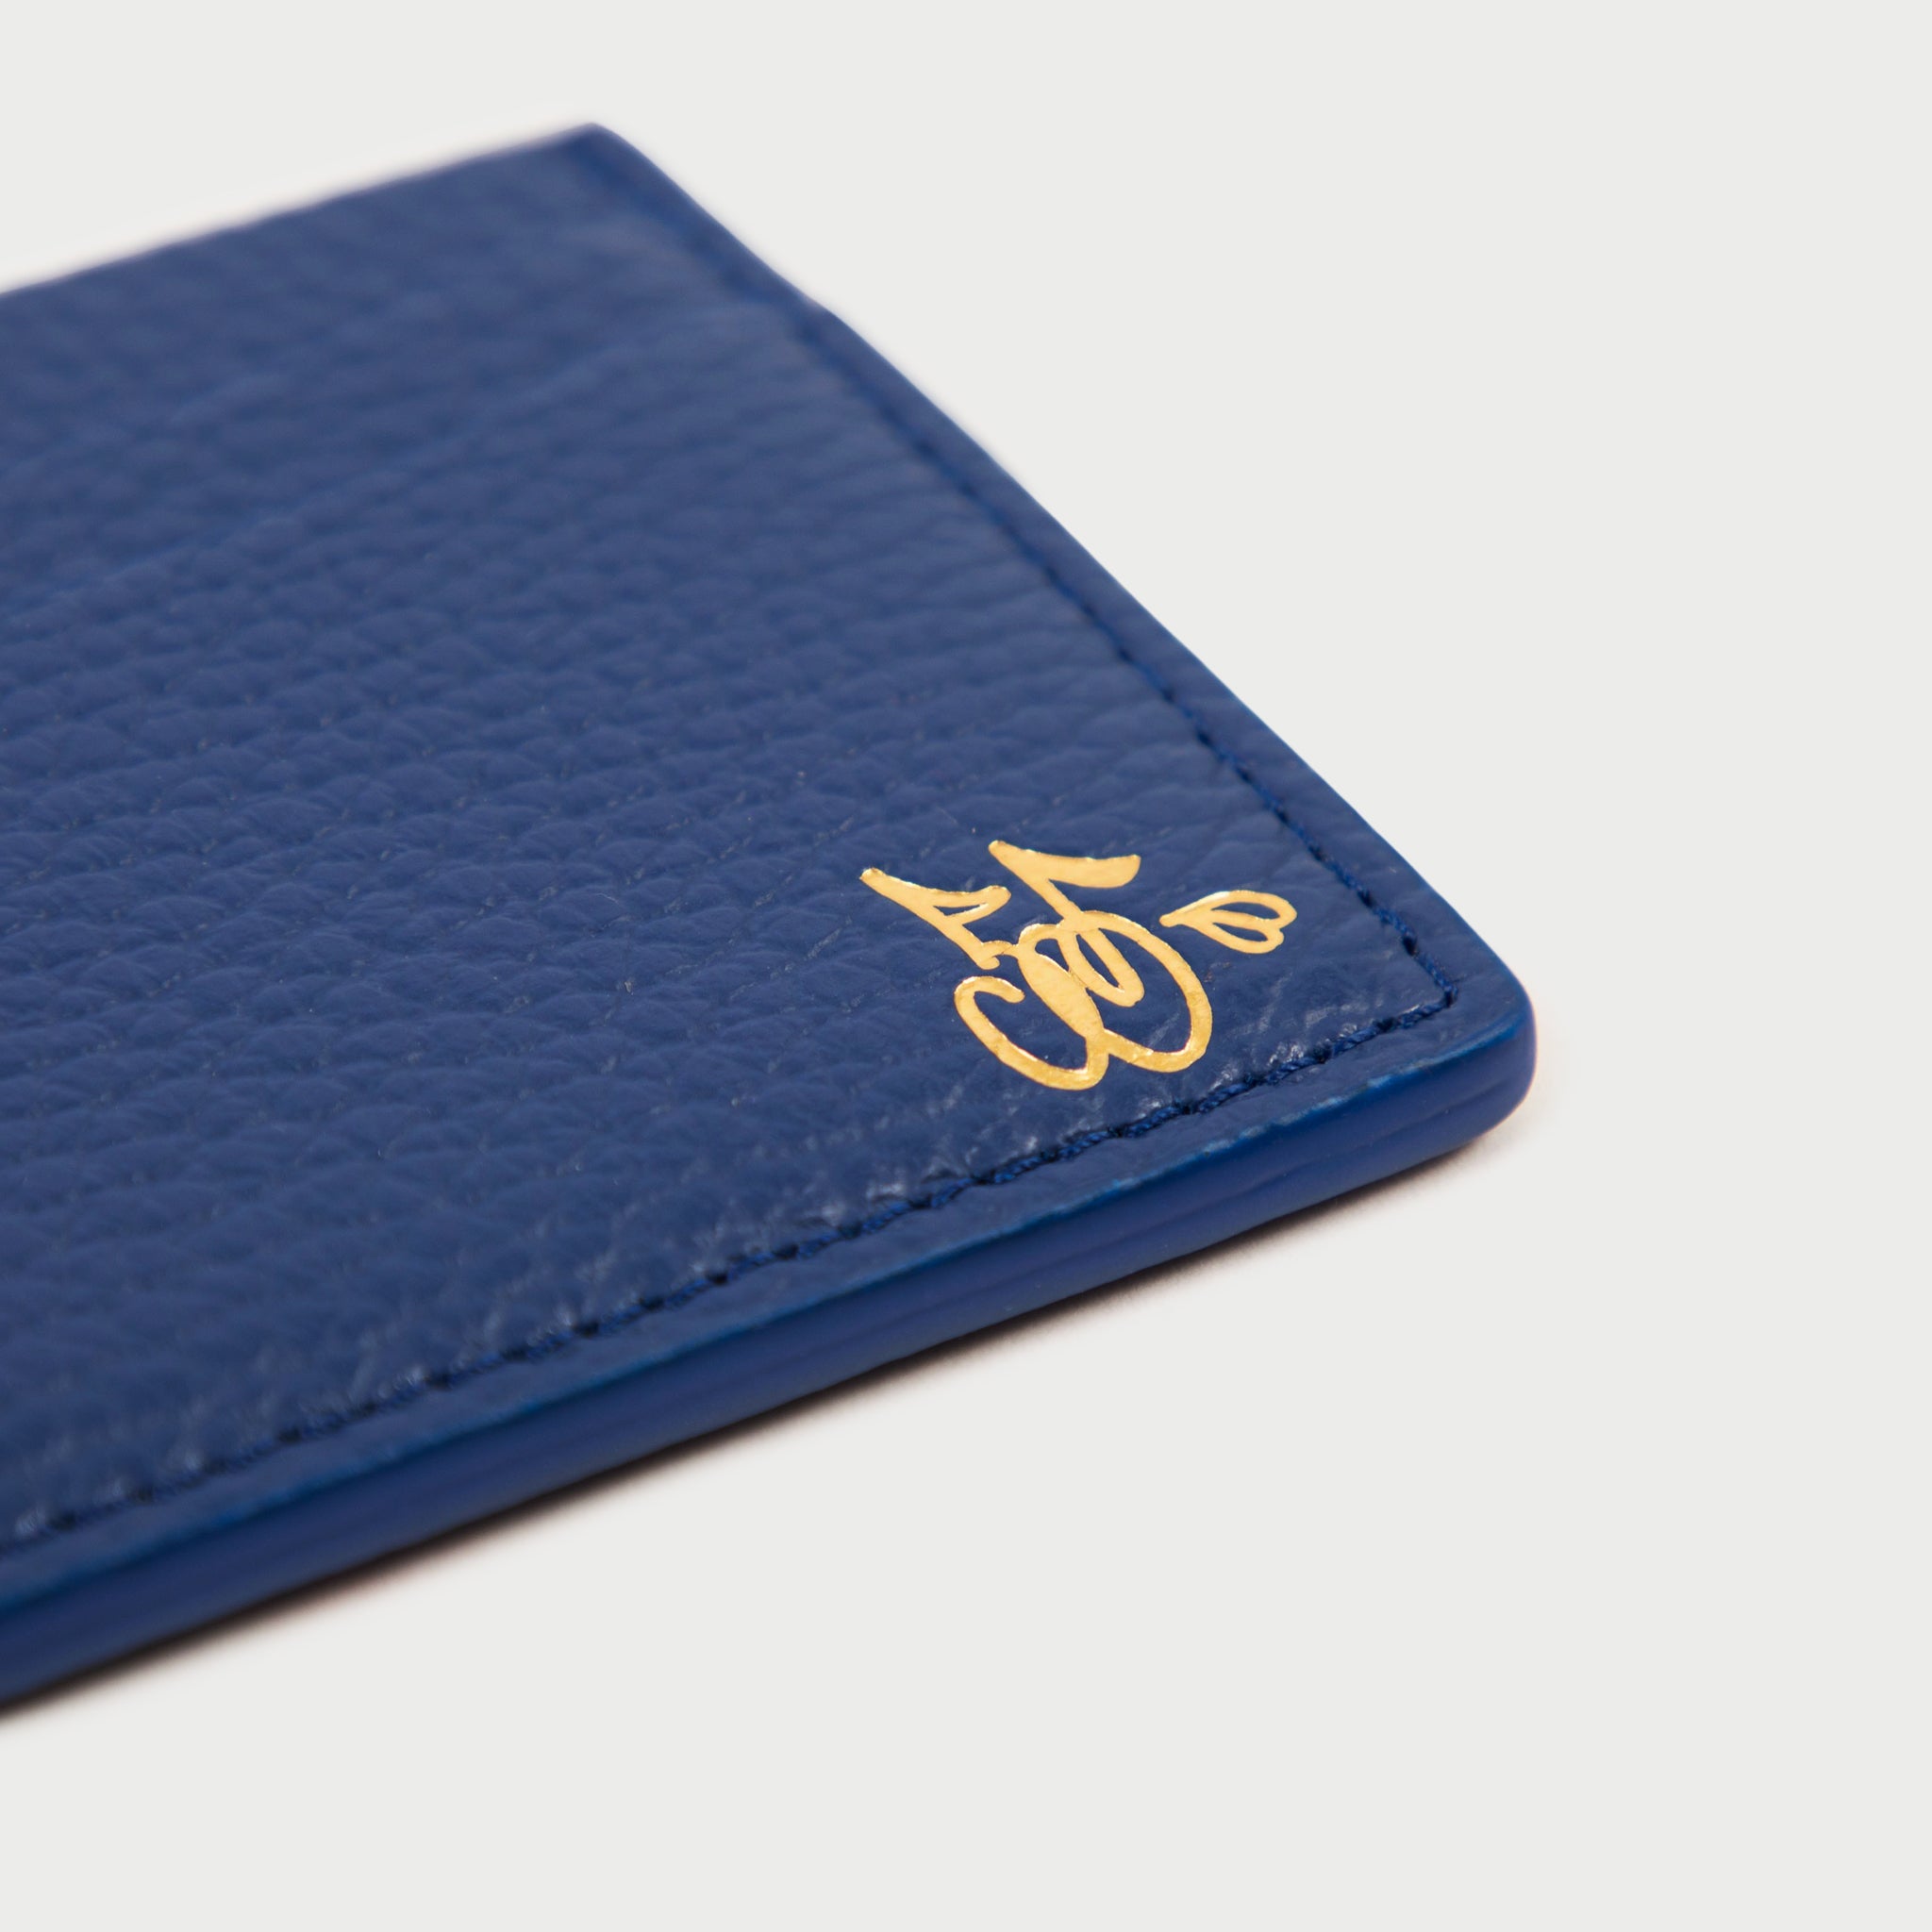 Leather Card Holder (Blue)